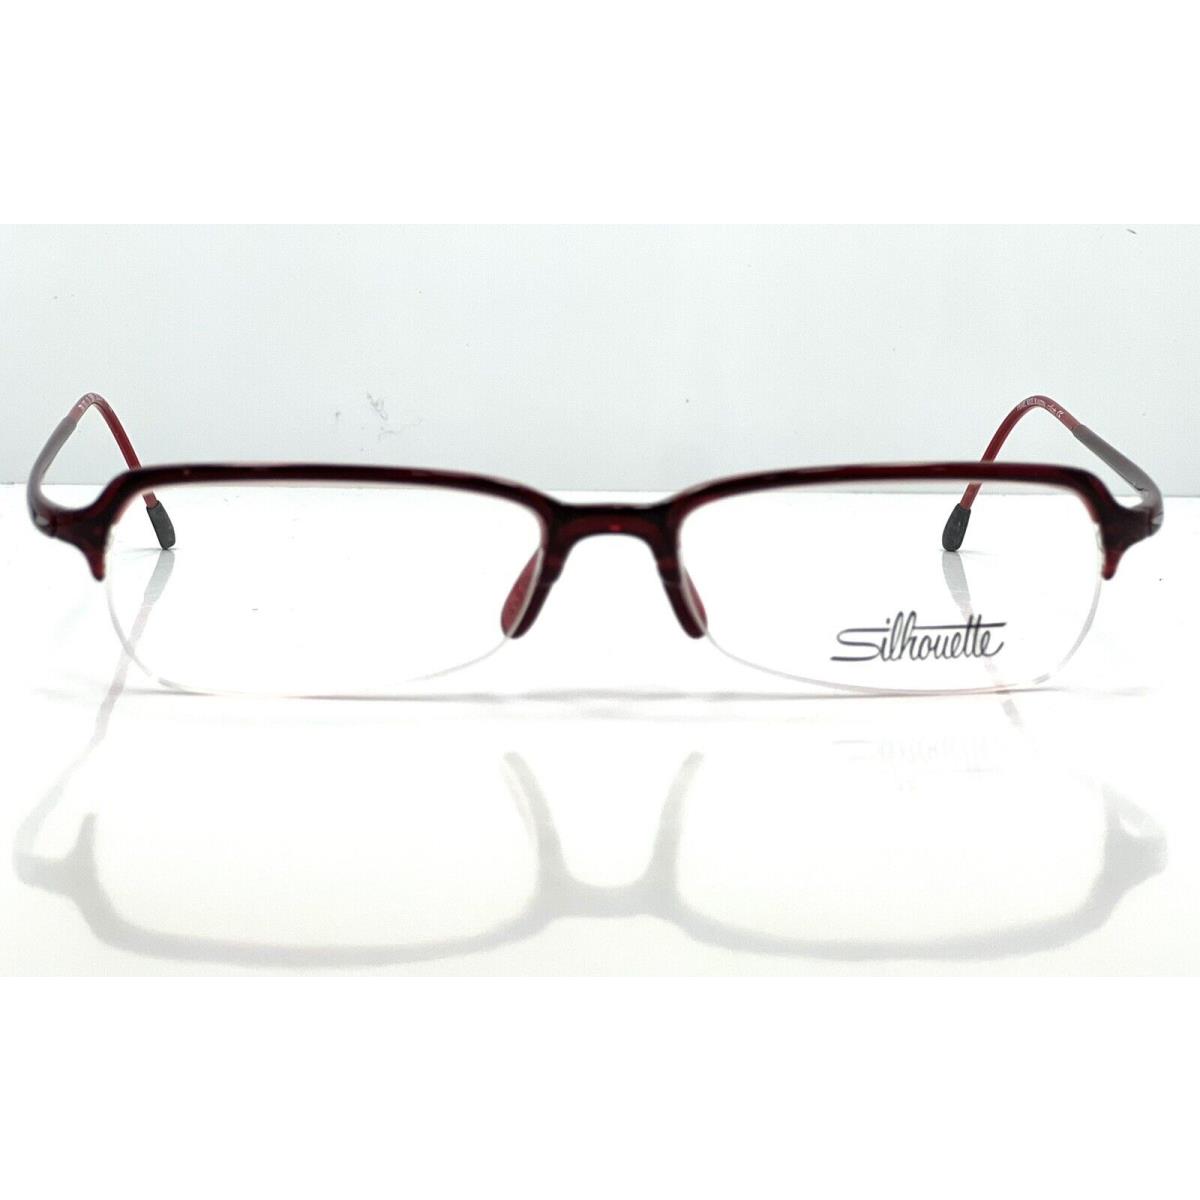 Silhouette Eyeglass Frames Spx 1517 10 6080